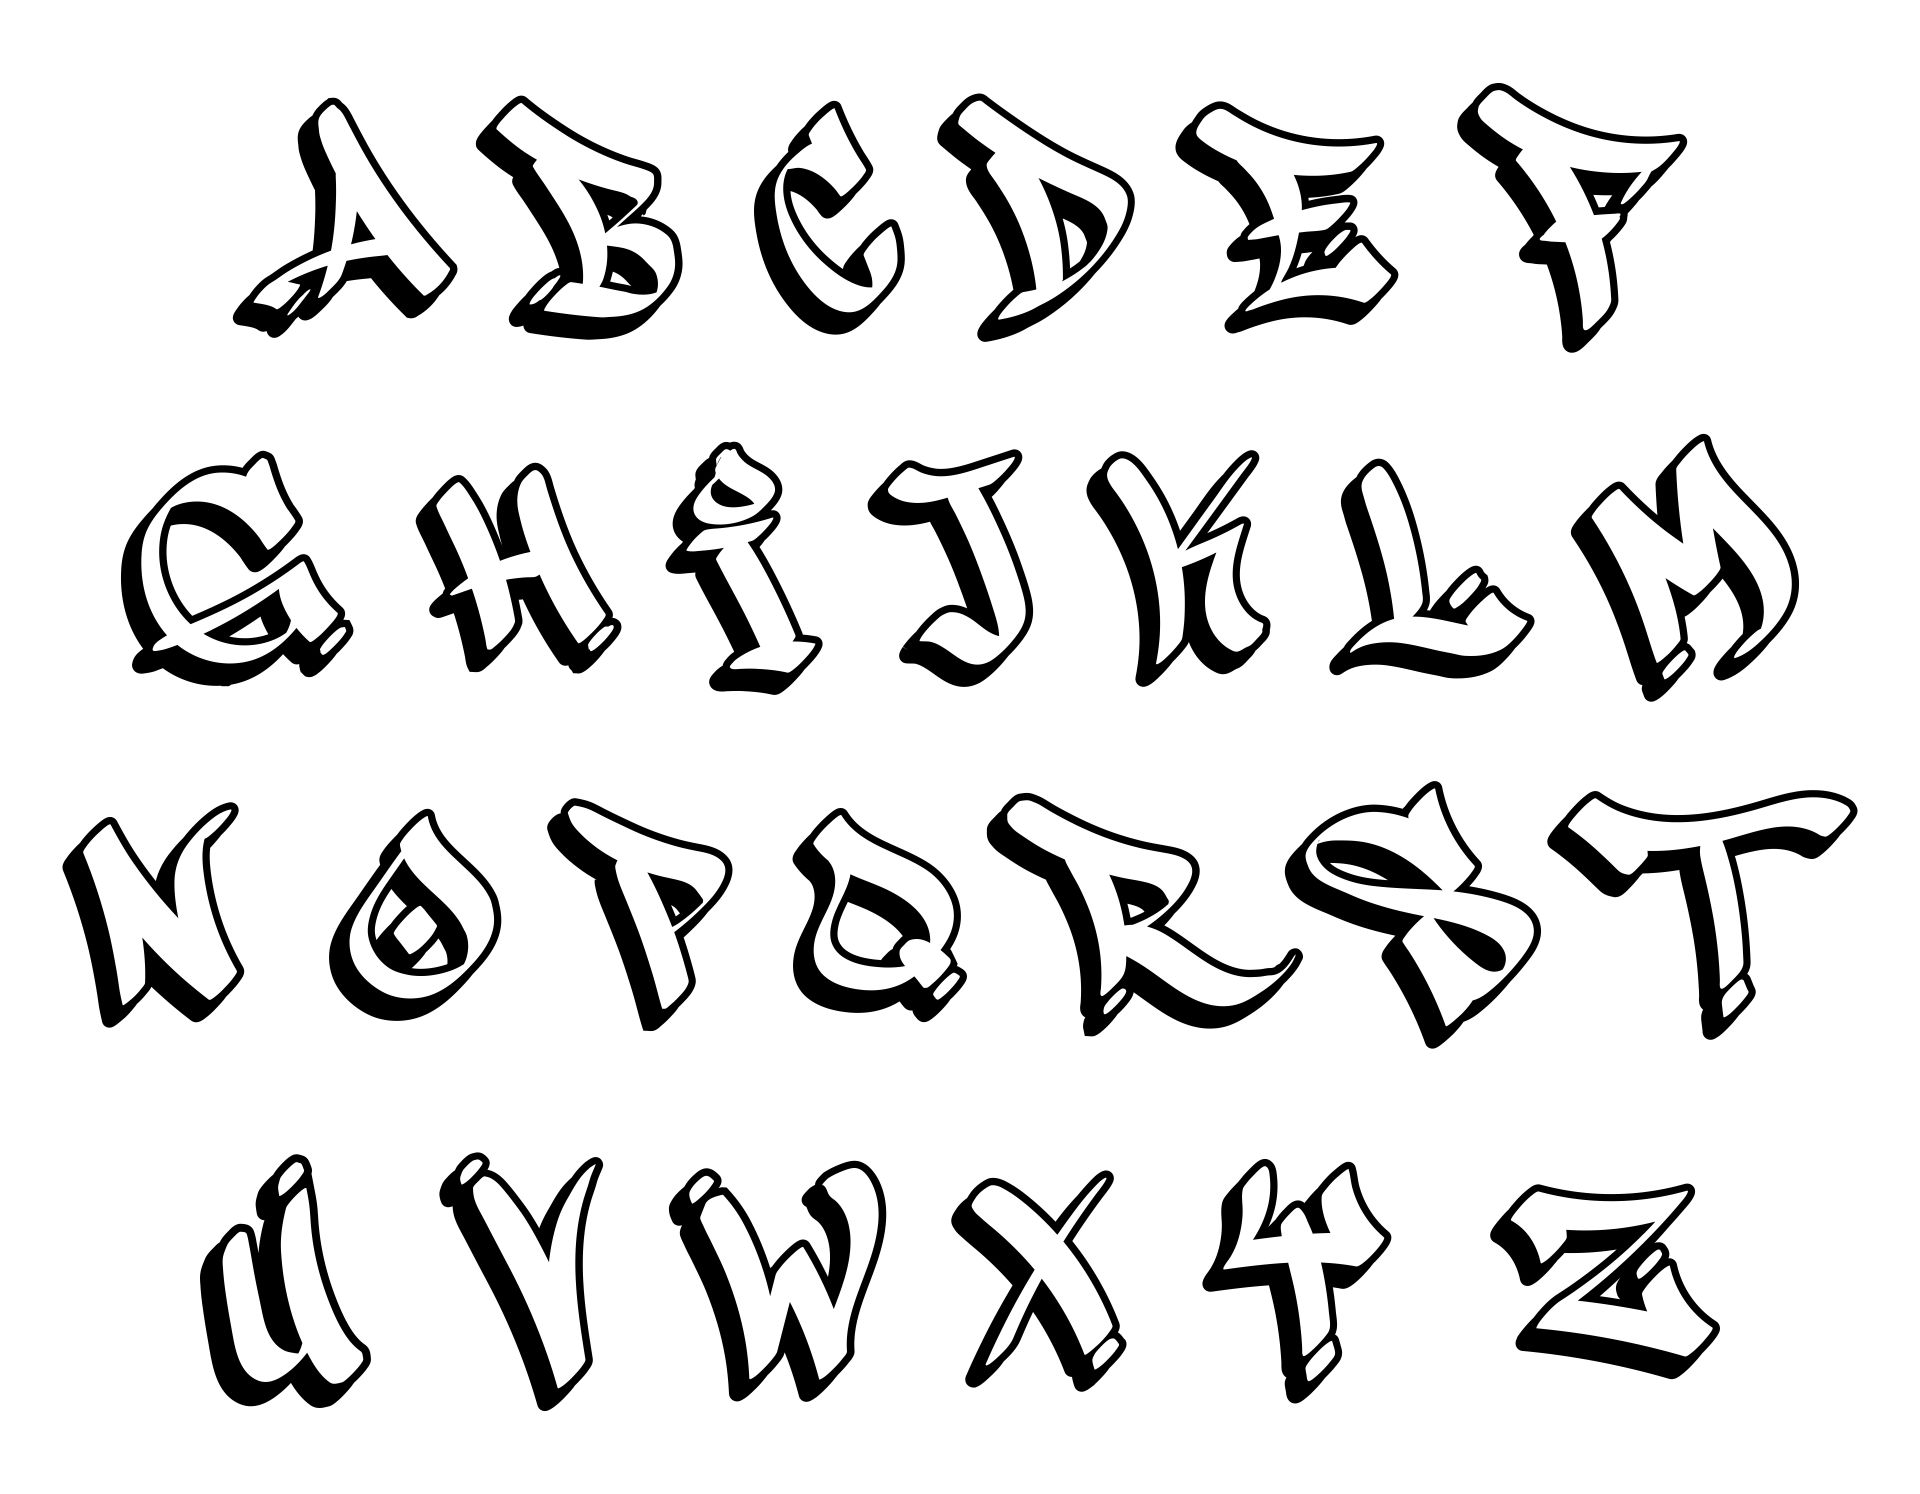 3D Graffiti Alphabet Fonts